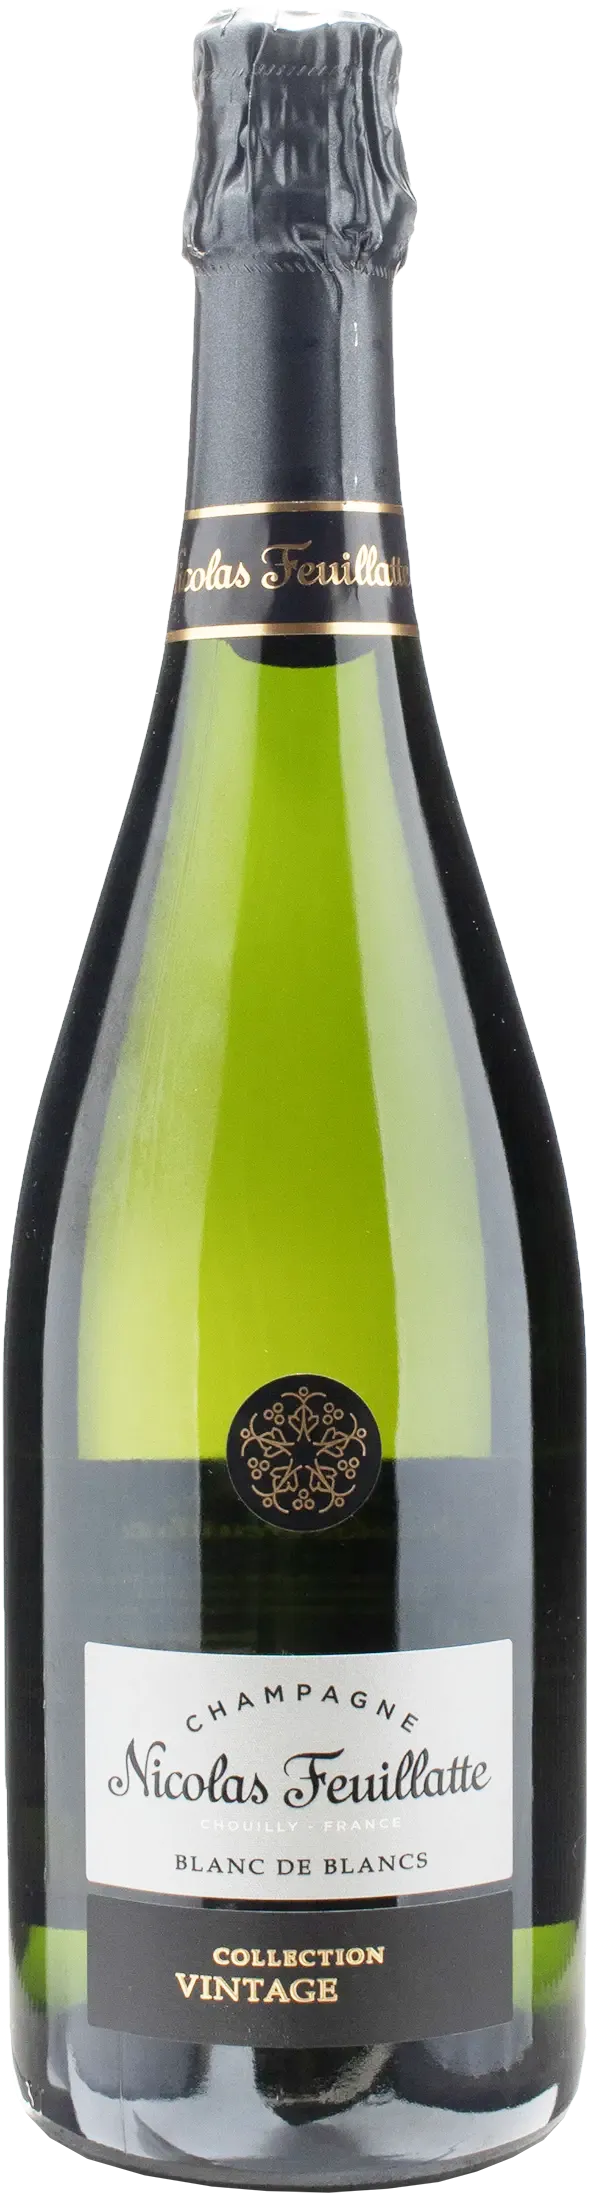 nicolas feuillatte champagne collection 2017 brut